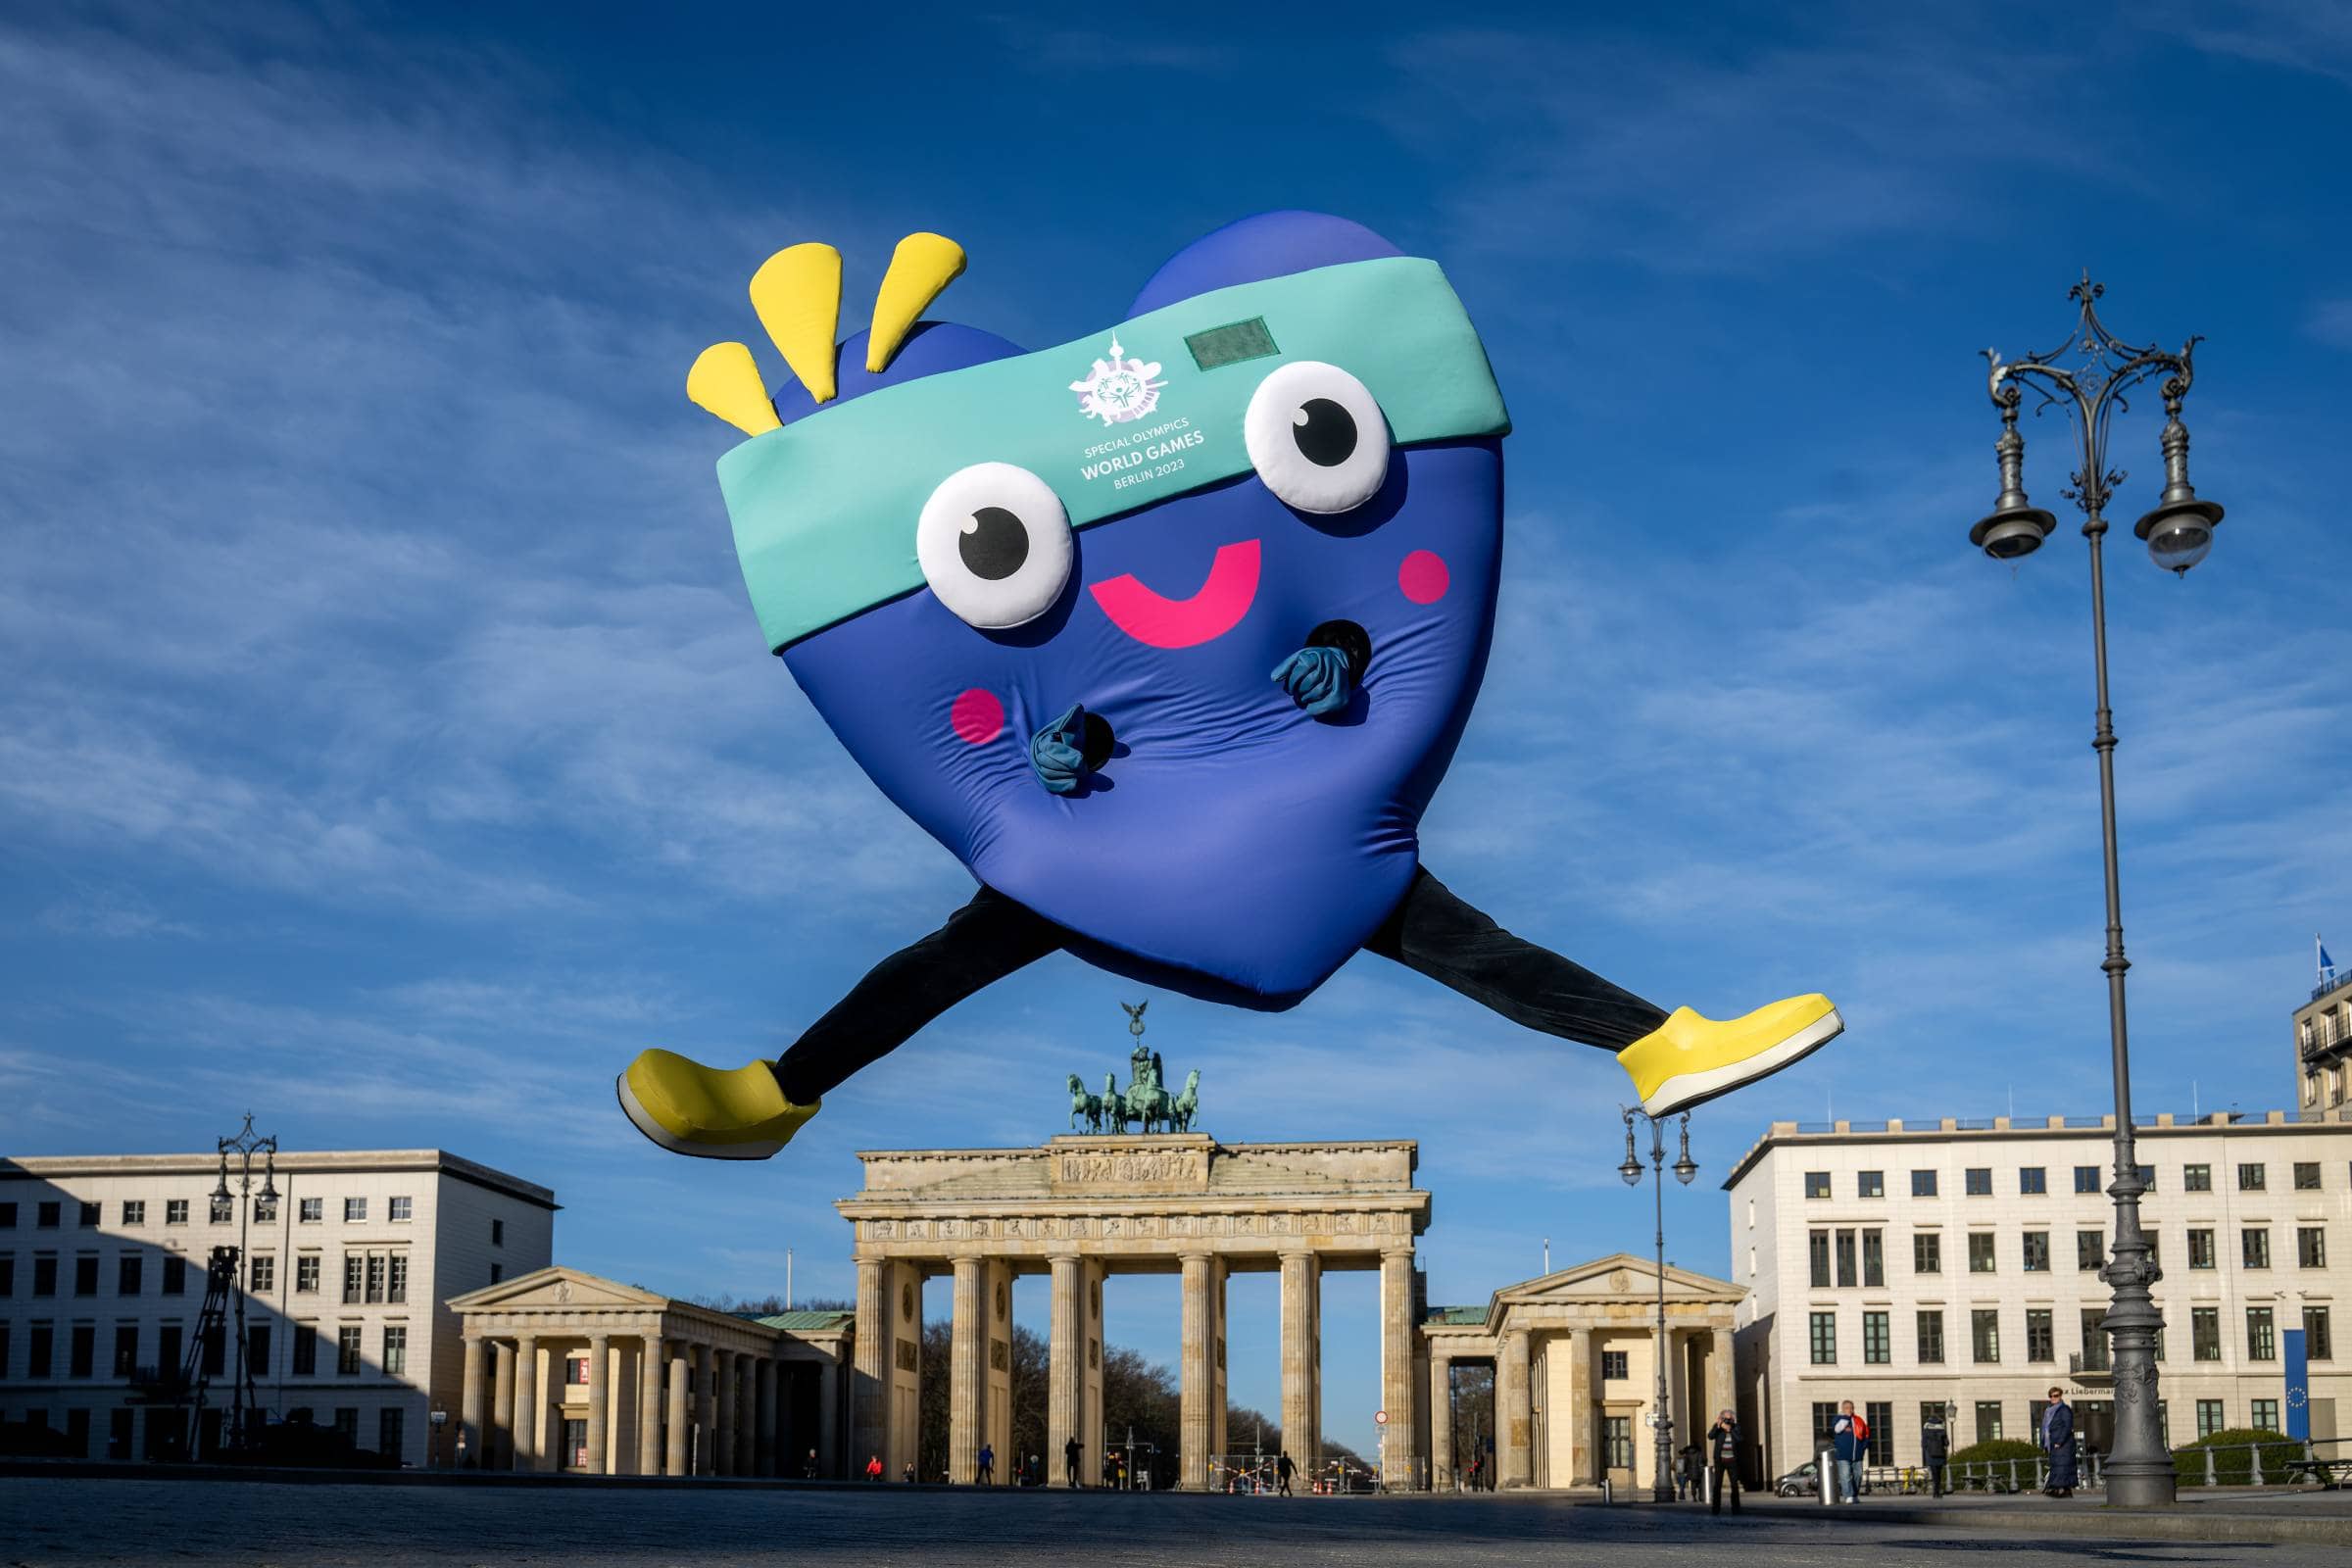 Familiensportfest Am Brandenburger Tor Im Rahmen Der „Special Olympics World Games Berlin“ // Himbeer